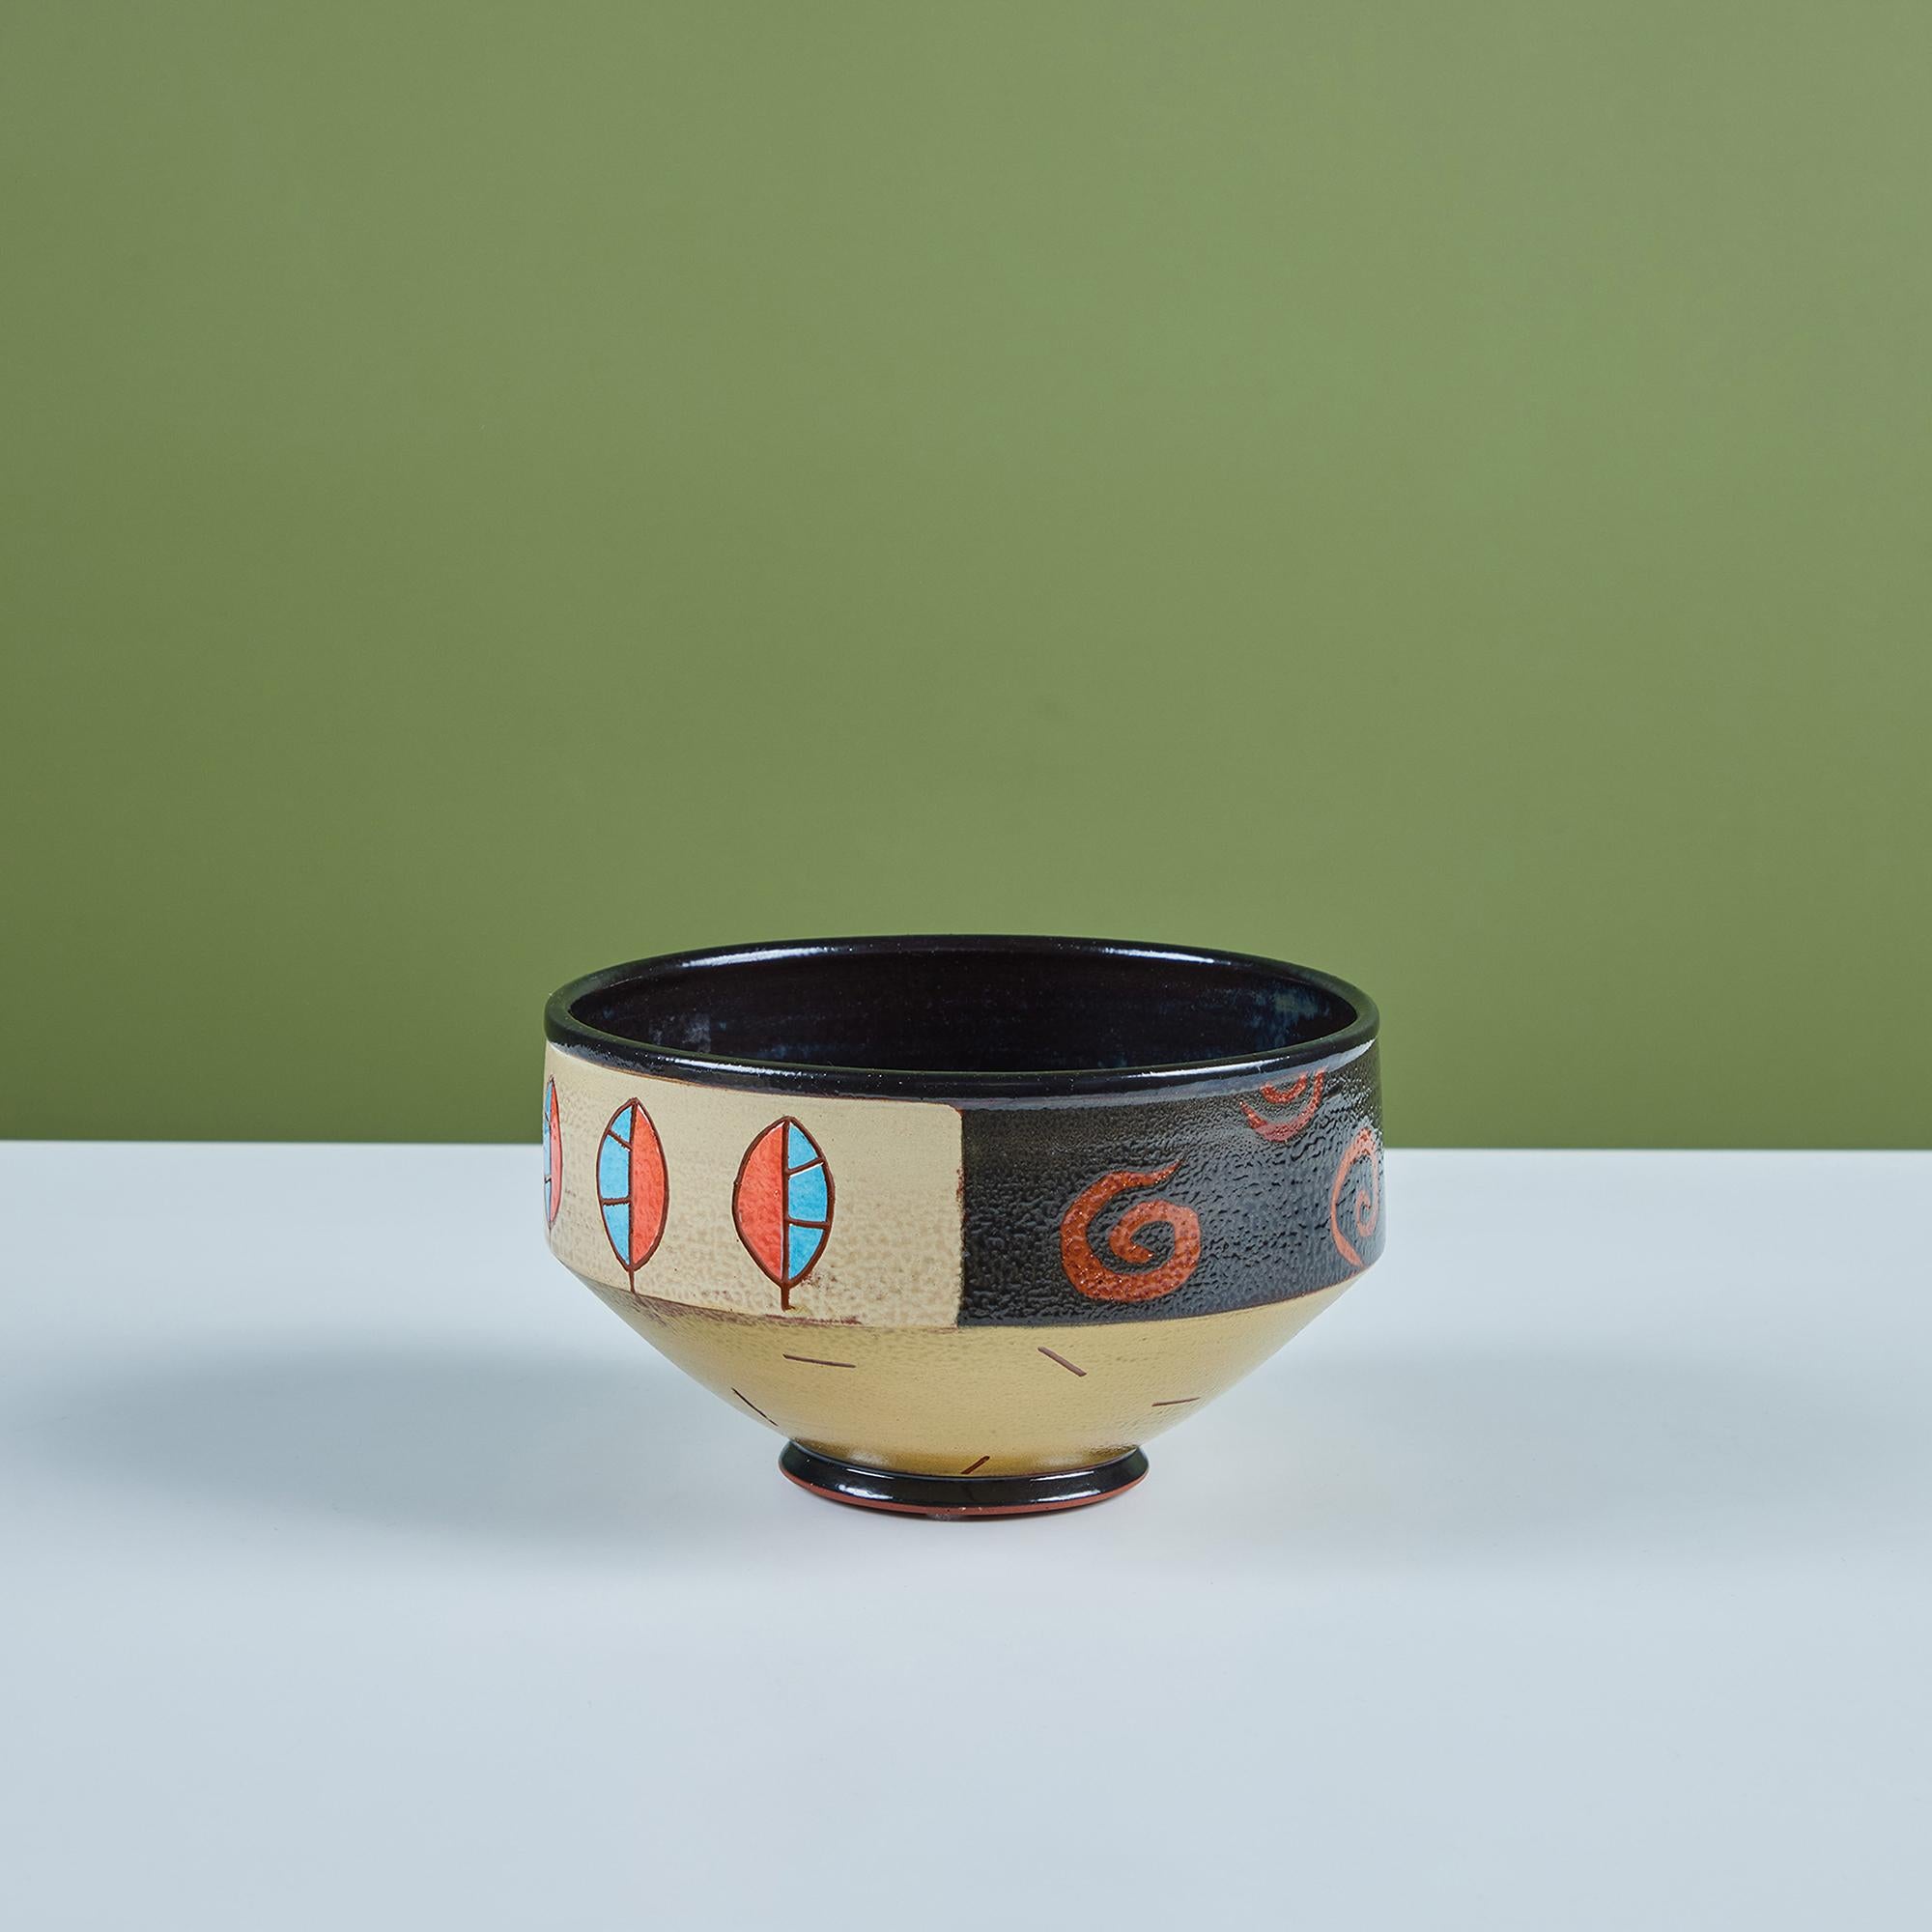 American Colorful Ceramic Glazed Bowl